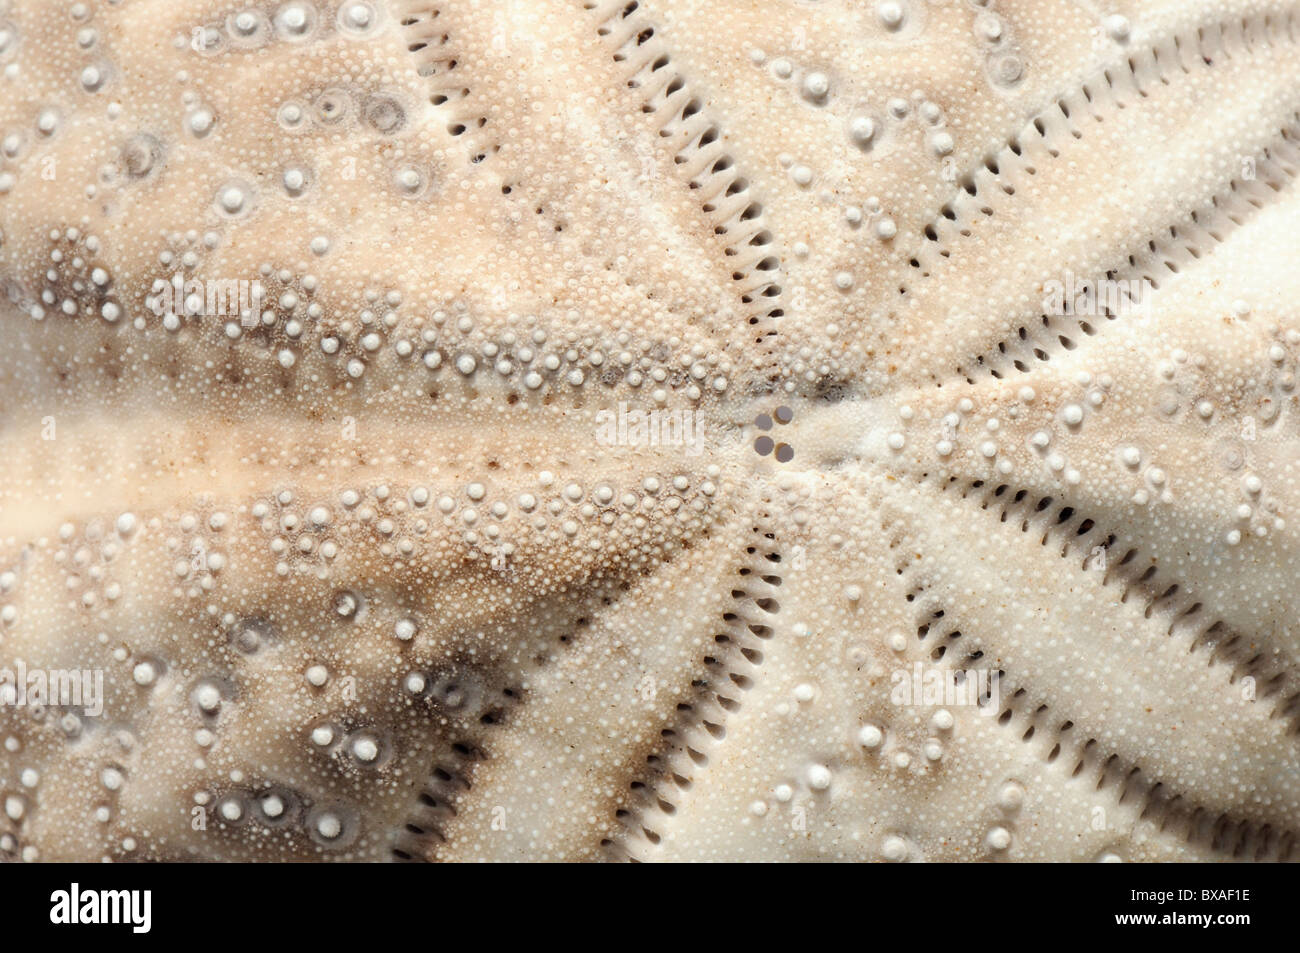 Detaillierte nah bis lila Herz Seeigel Schale (Spatangus Purpureus). Stockfoto